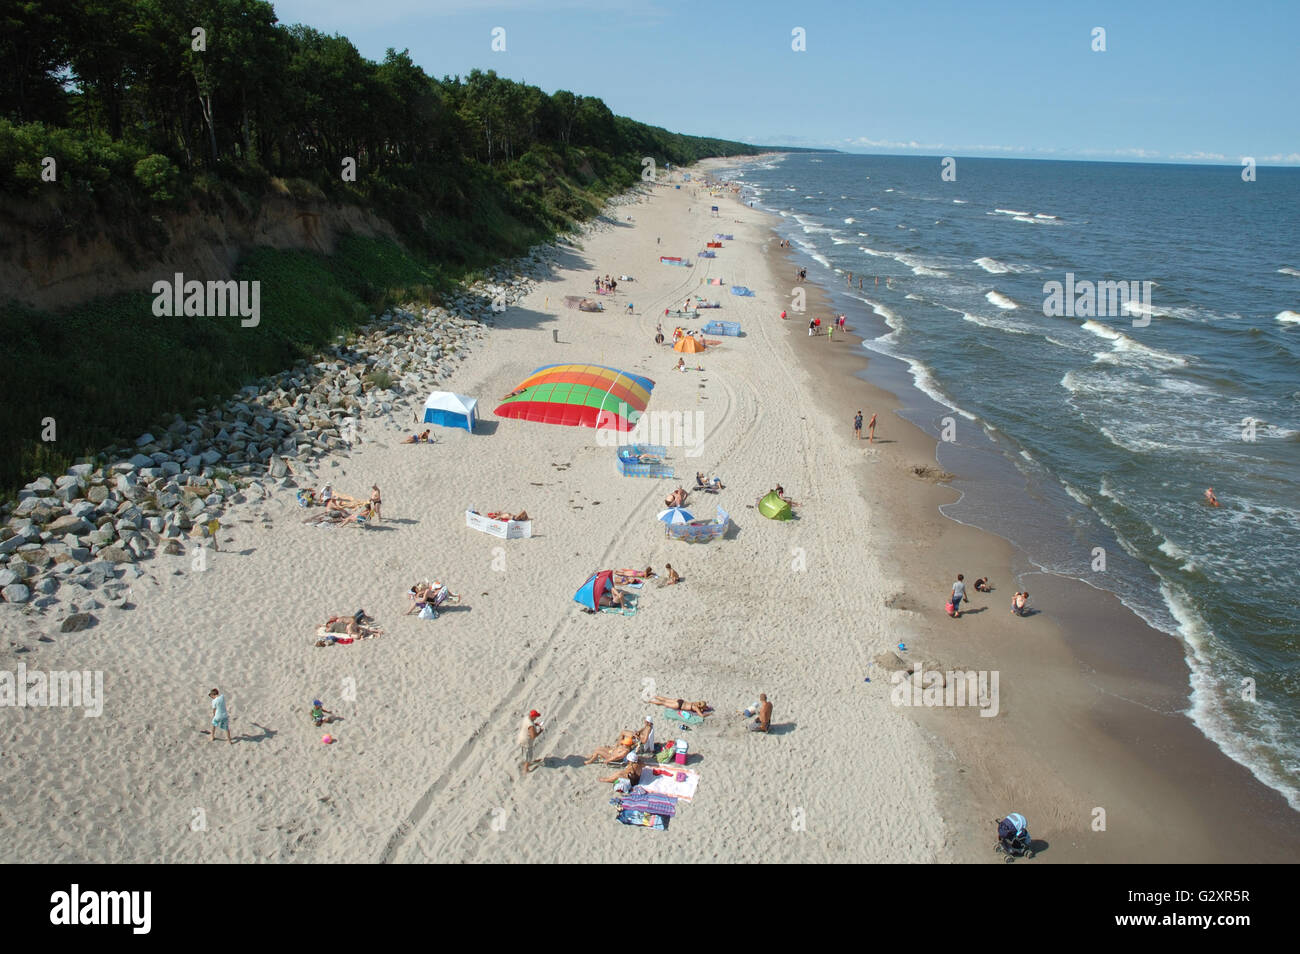 TRZESACZ, POLAND - JULY 13: Unidentified people on beach in Trzesacz  Poland over Baltic sea. 13.07.2013 Stock Photo